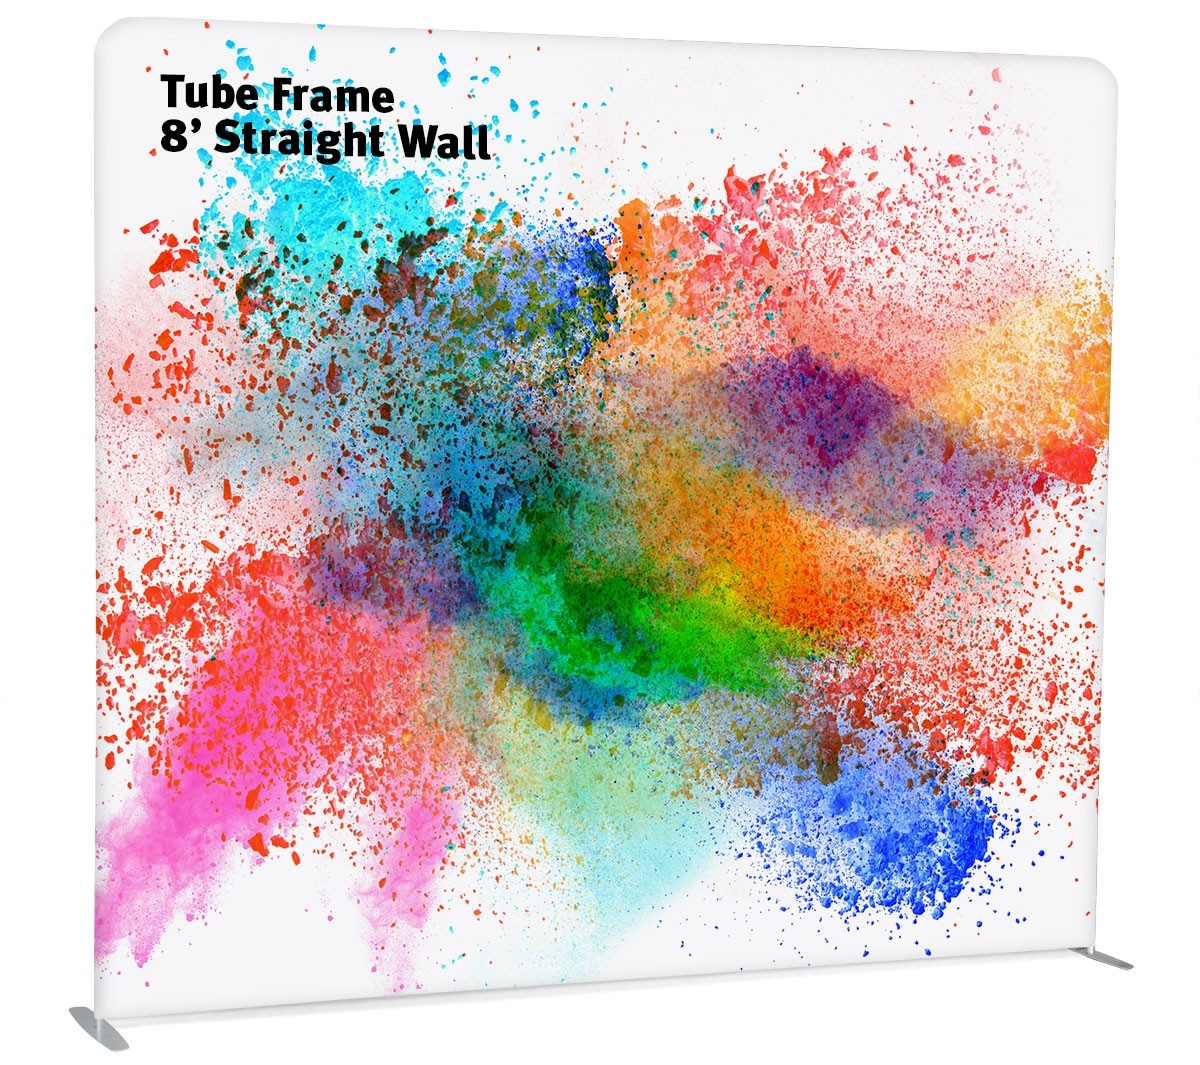 Tube Frame 8' Straight Wall Pillowcase Fabric Display